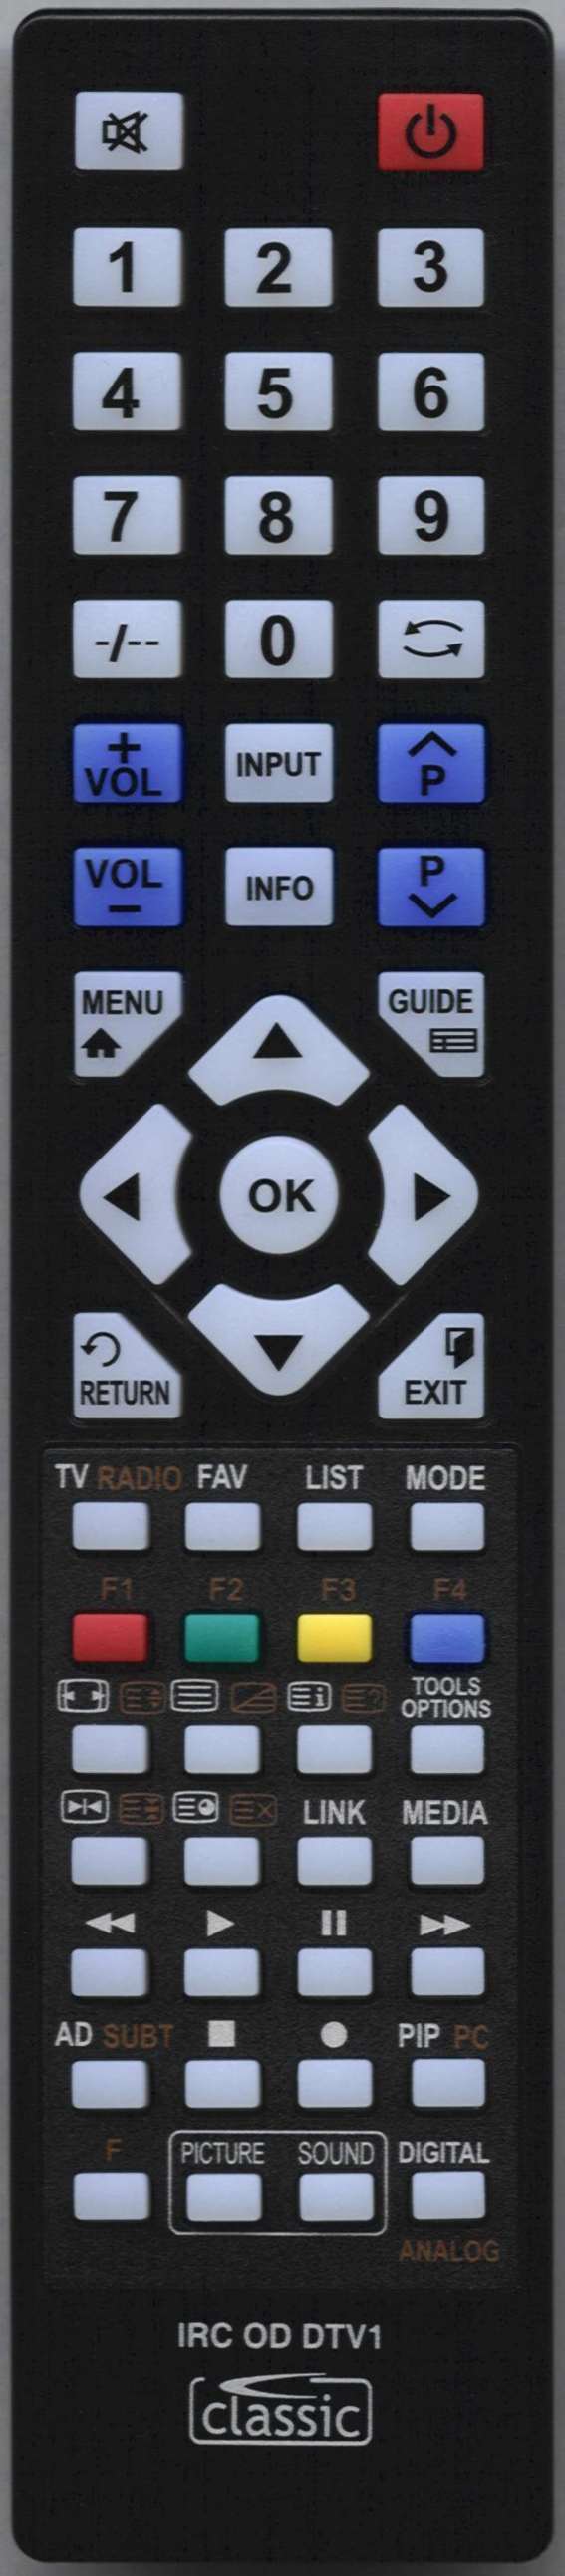 Digitrex CFD-2271H Remote Control